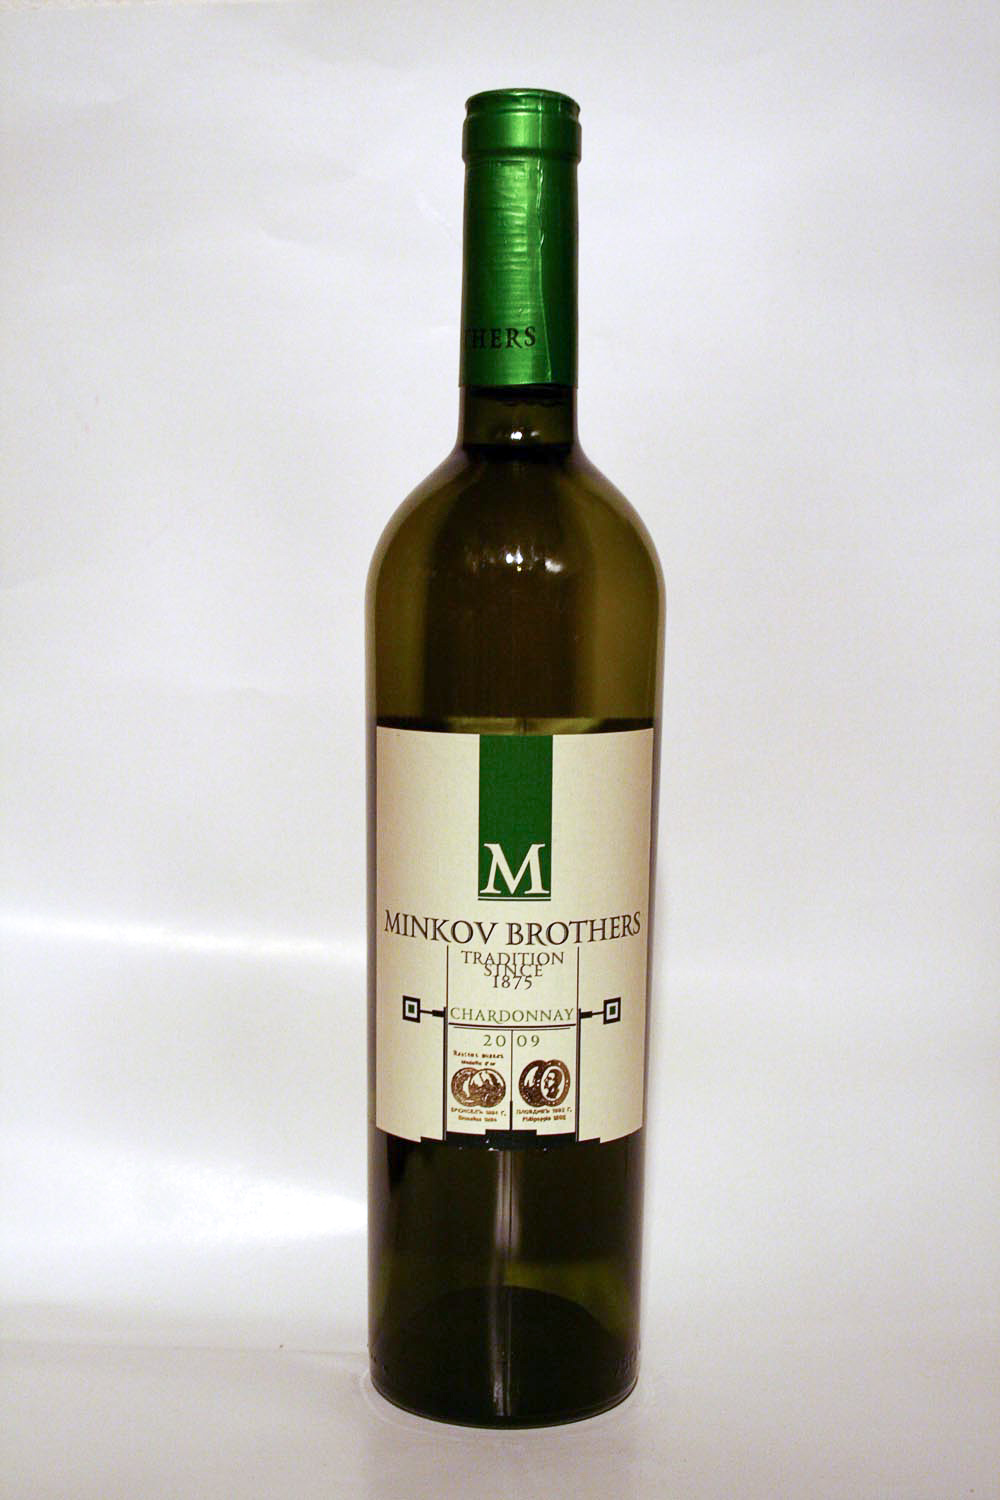 Minkov Brothers Shardonnay 2009